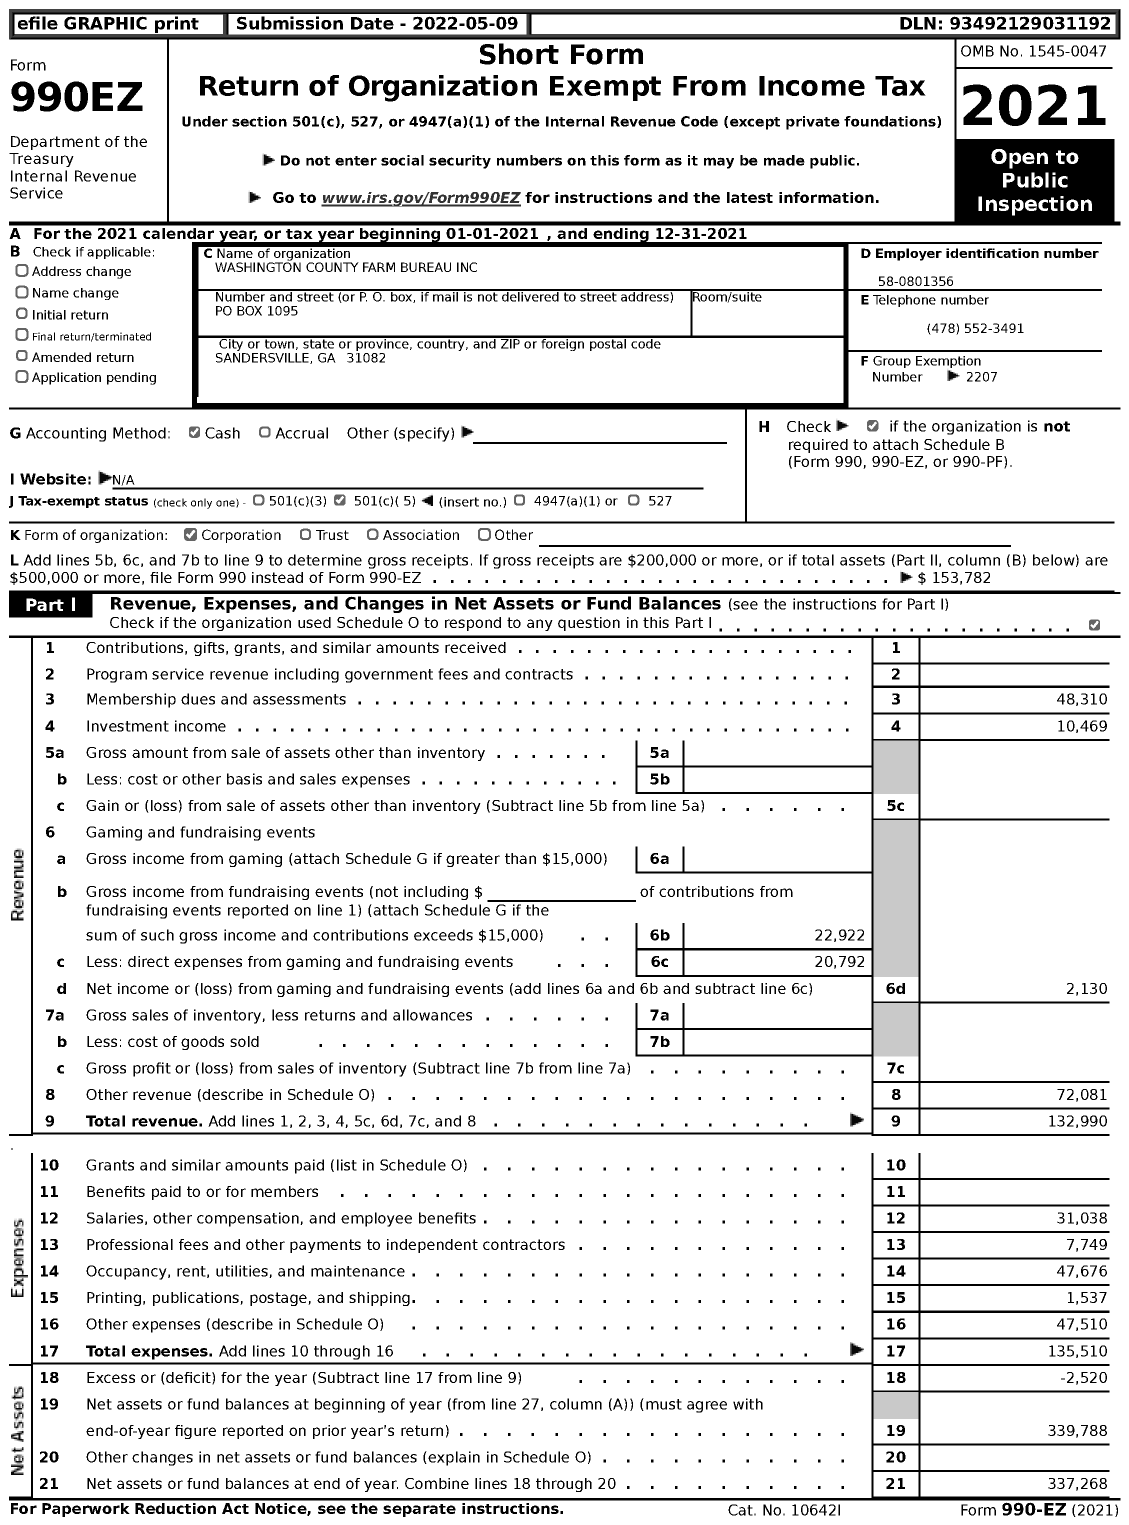 Image of first page of 2021 Form 990EZ for Georgia Farm Bureau Federation - Washington County Farm Bureau